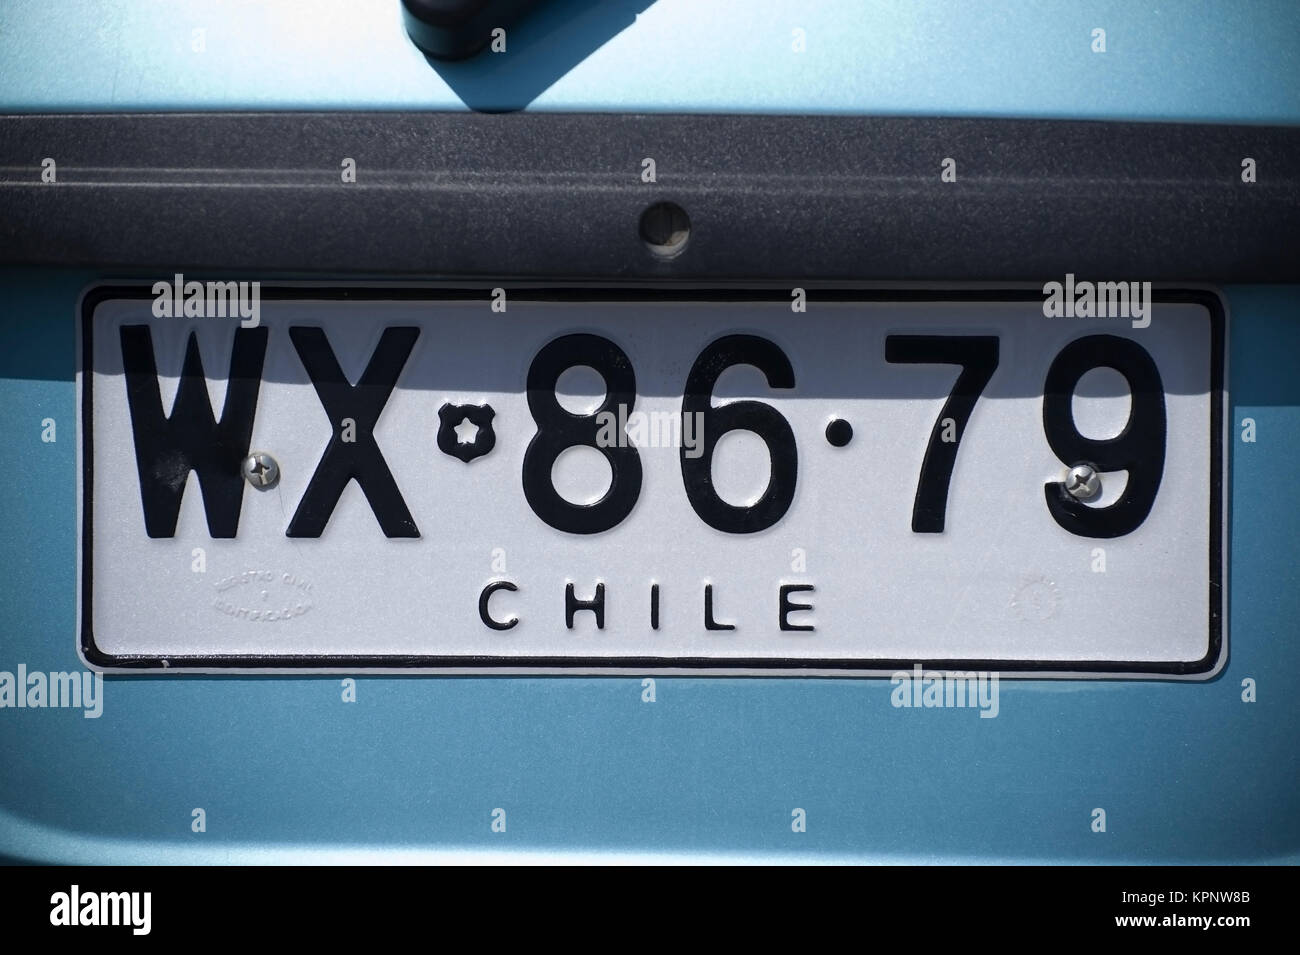 Autokennzeichen, Chili - plaque, Chili Banque D'Images